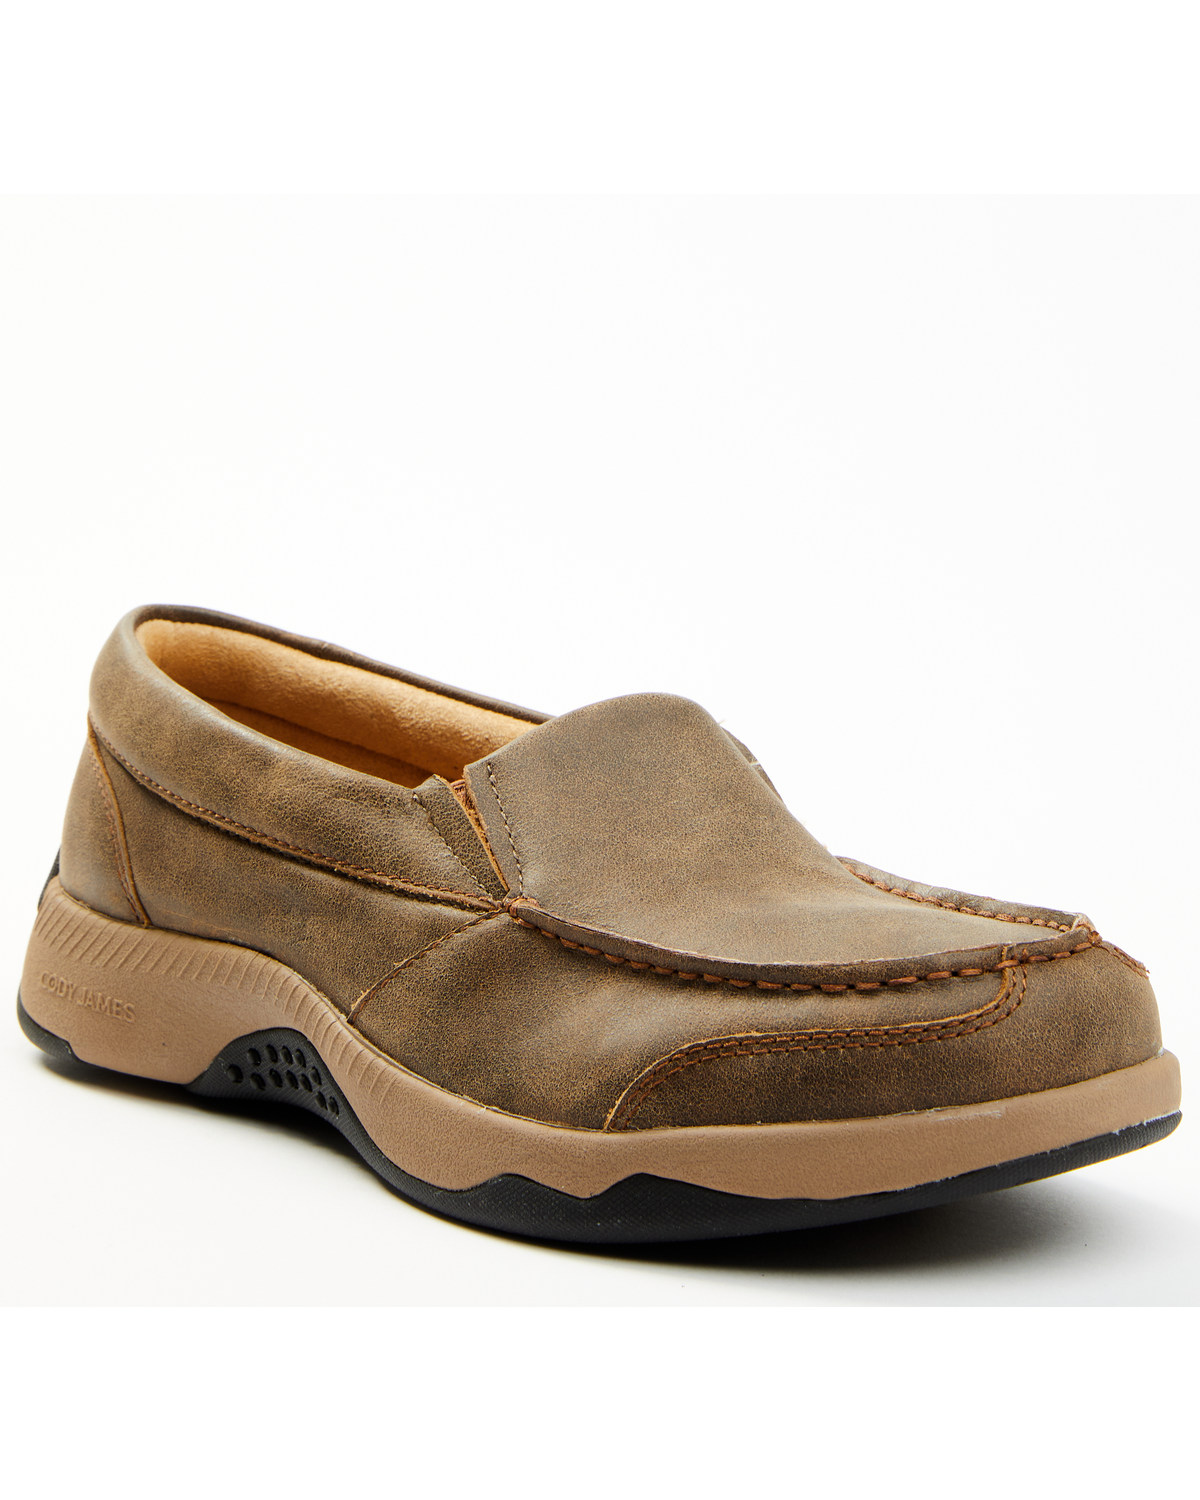 Cody James Men's Trust Me Beaned Slip-On Casual Oxford Shoes - Moc Toe